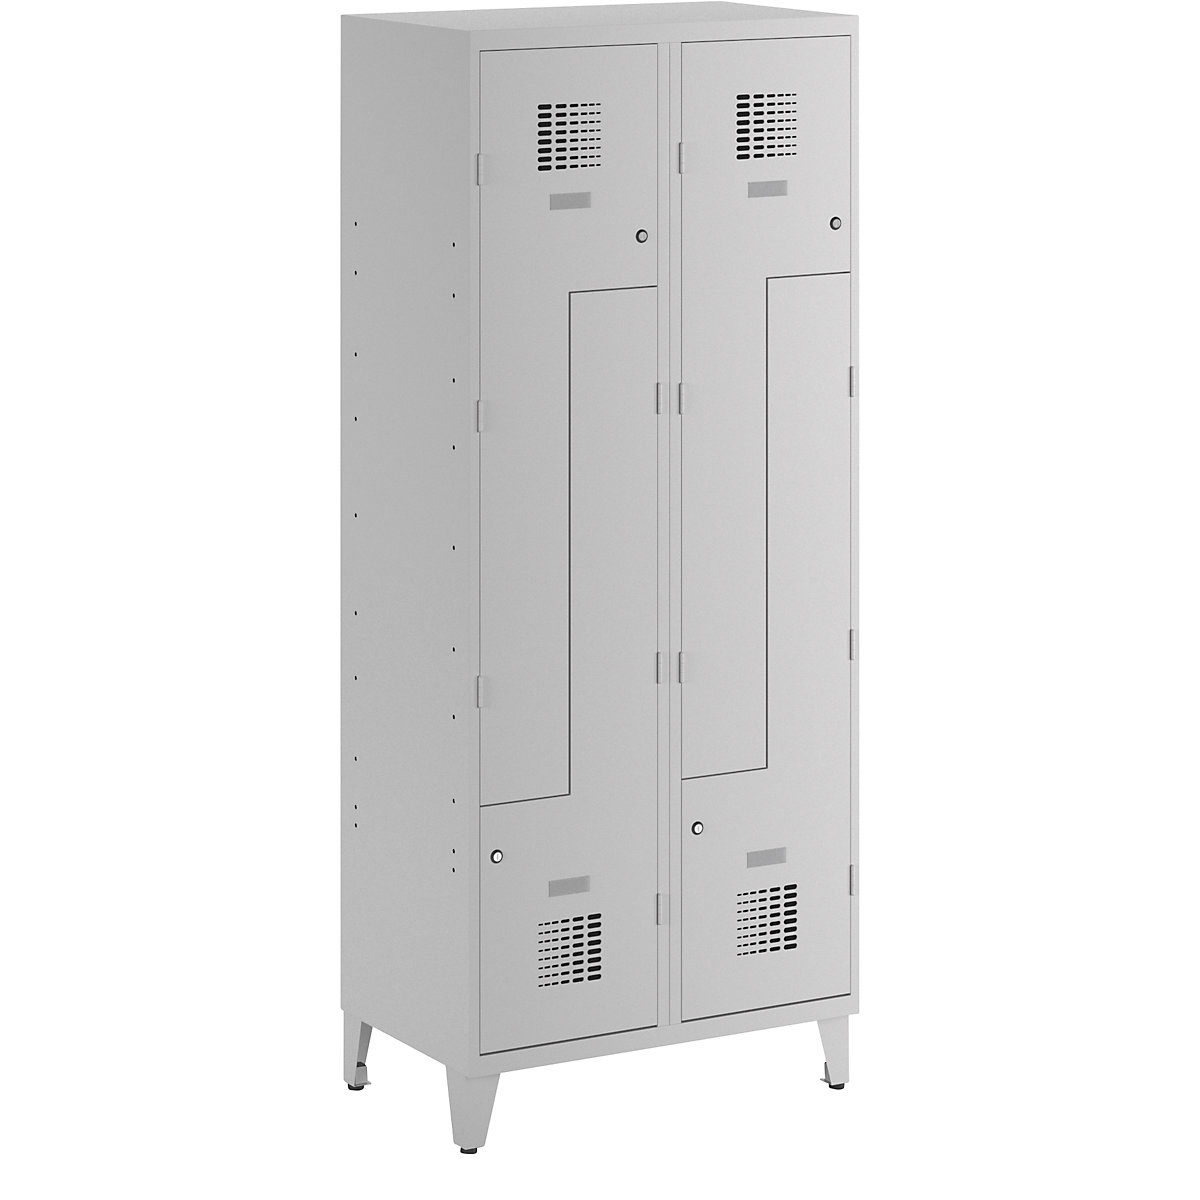 Z cloakroom locker, HxWxD 1940 x 800 x 500 mm, with feet, light grey doors-1